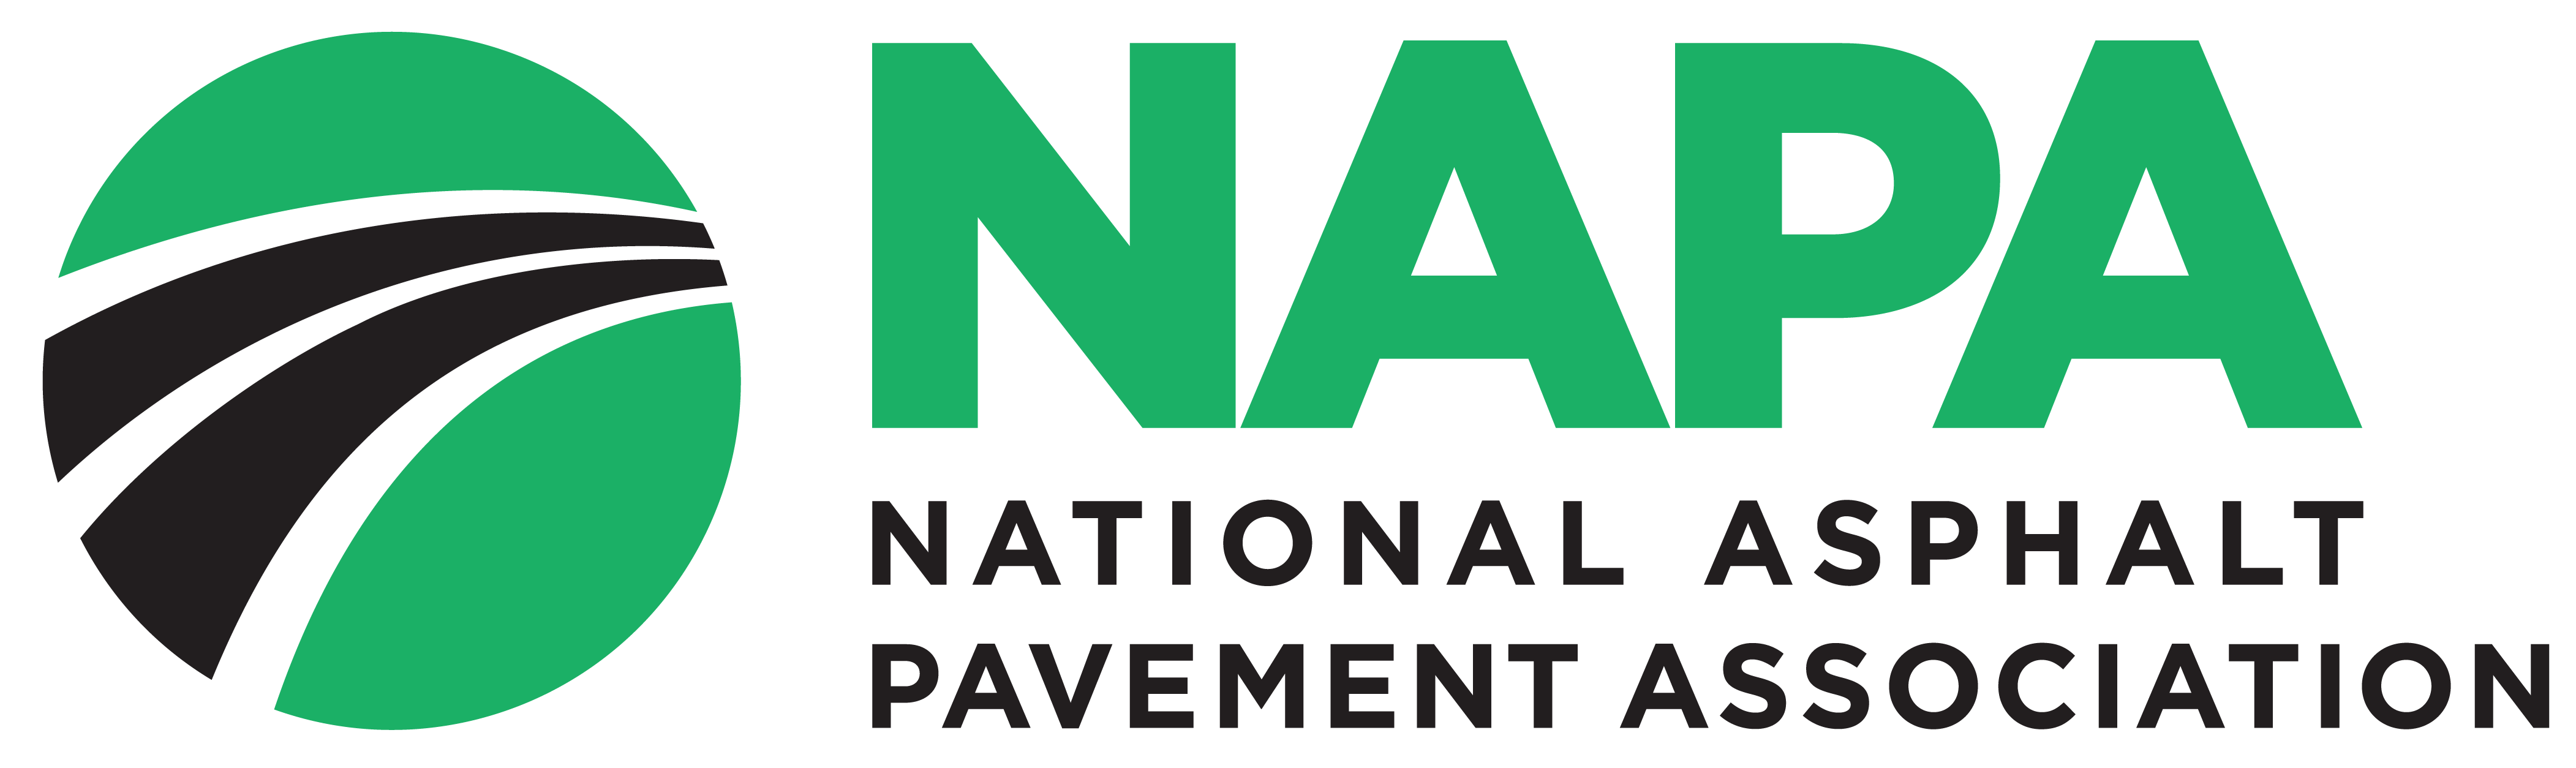 National Asphalt Pavement Association